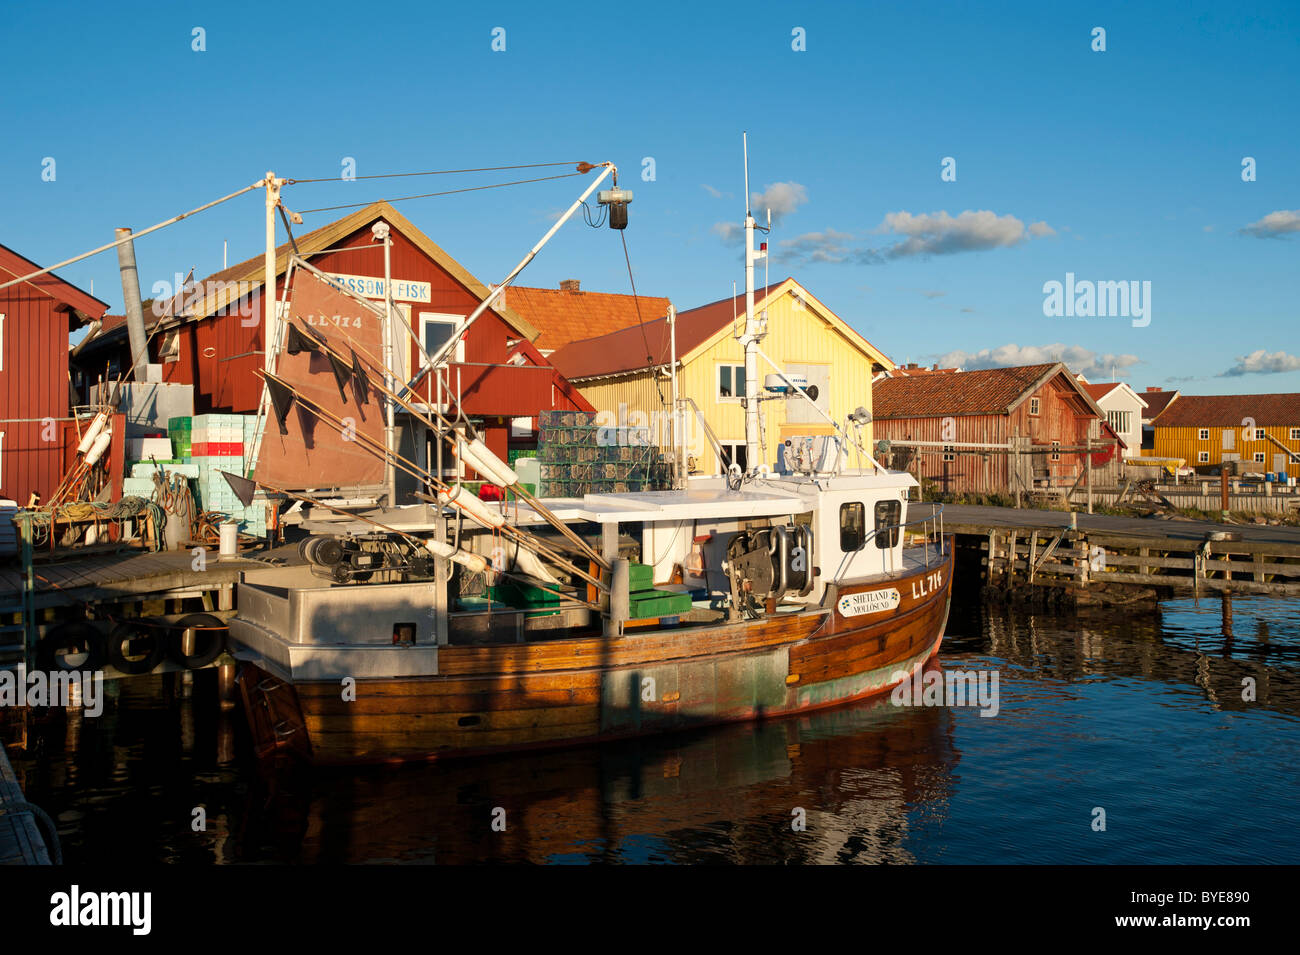 Harbor with fishing boats and fishery, Molloesund, Vaestra Goetaland County, Sweden, Europe Stock Photo